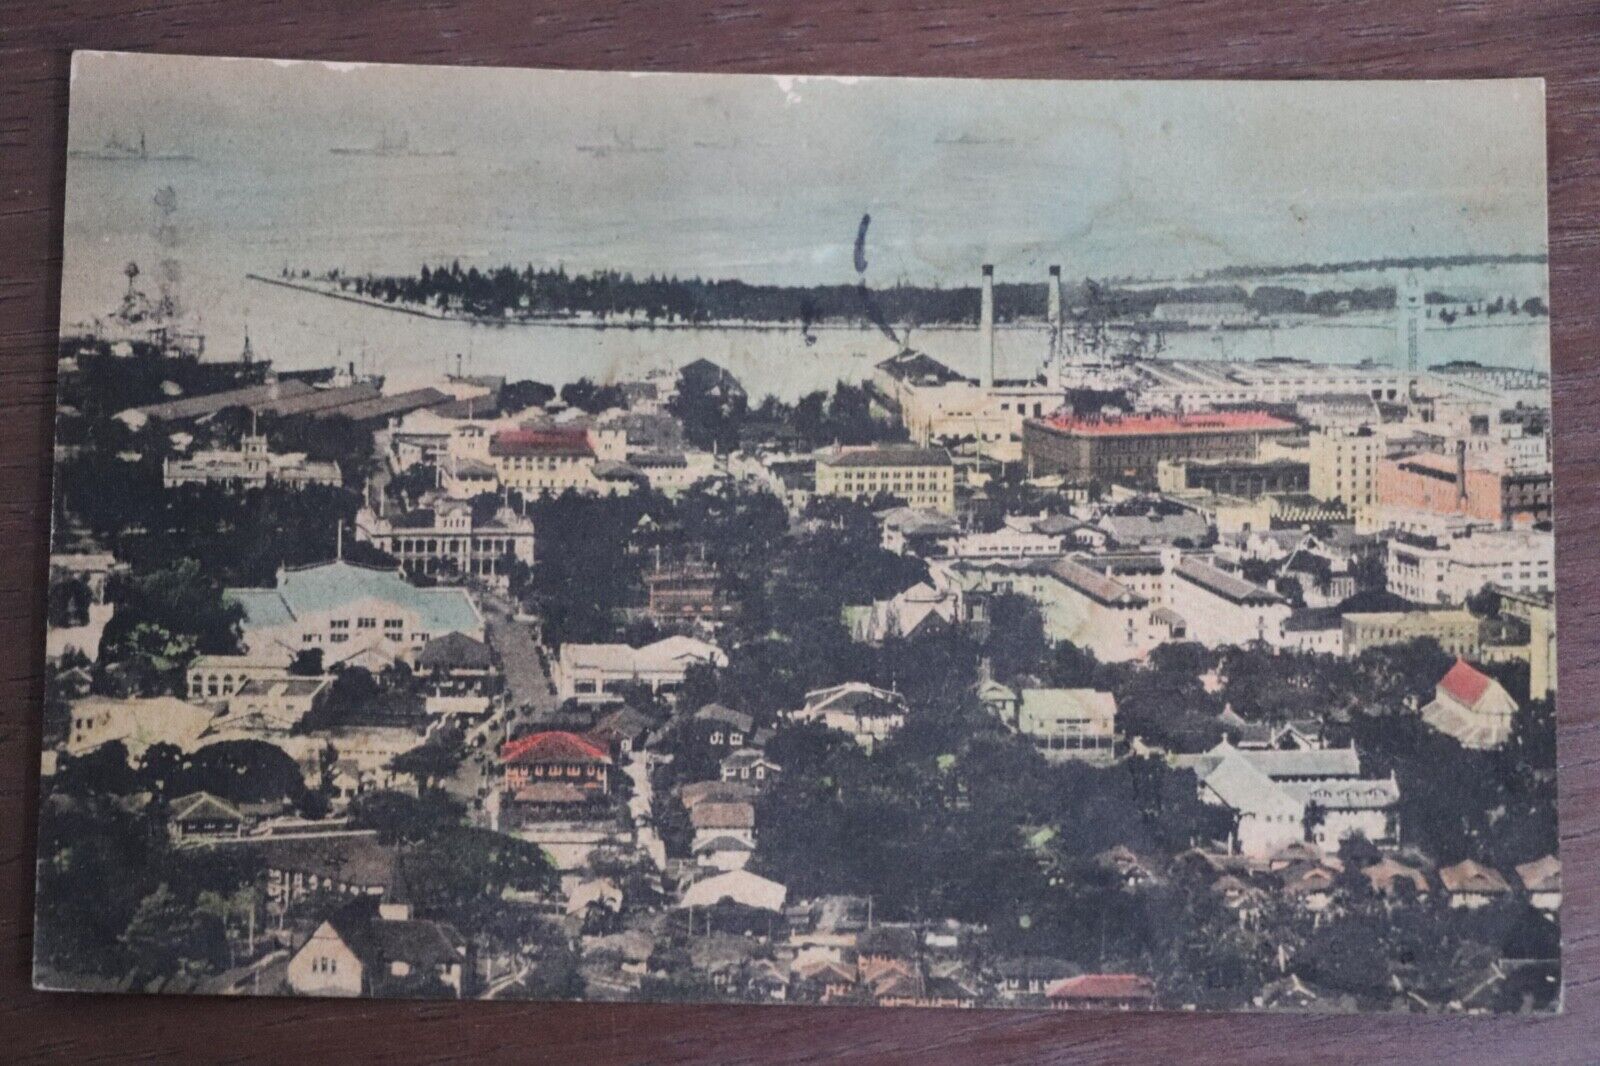 Hand-Colored Post Card from Honolulu, Hawaii - 1931